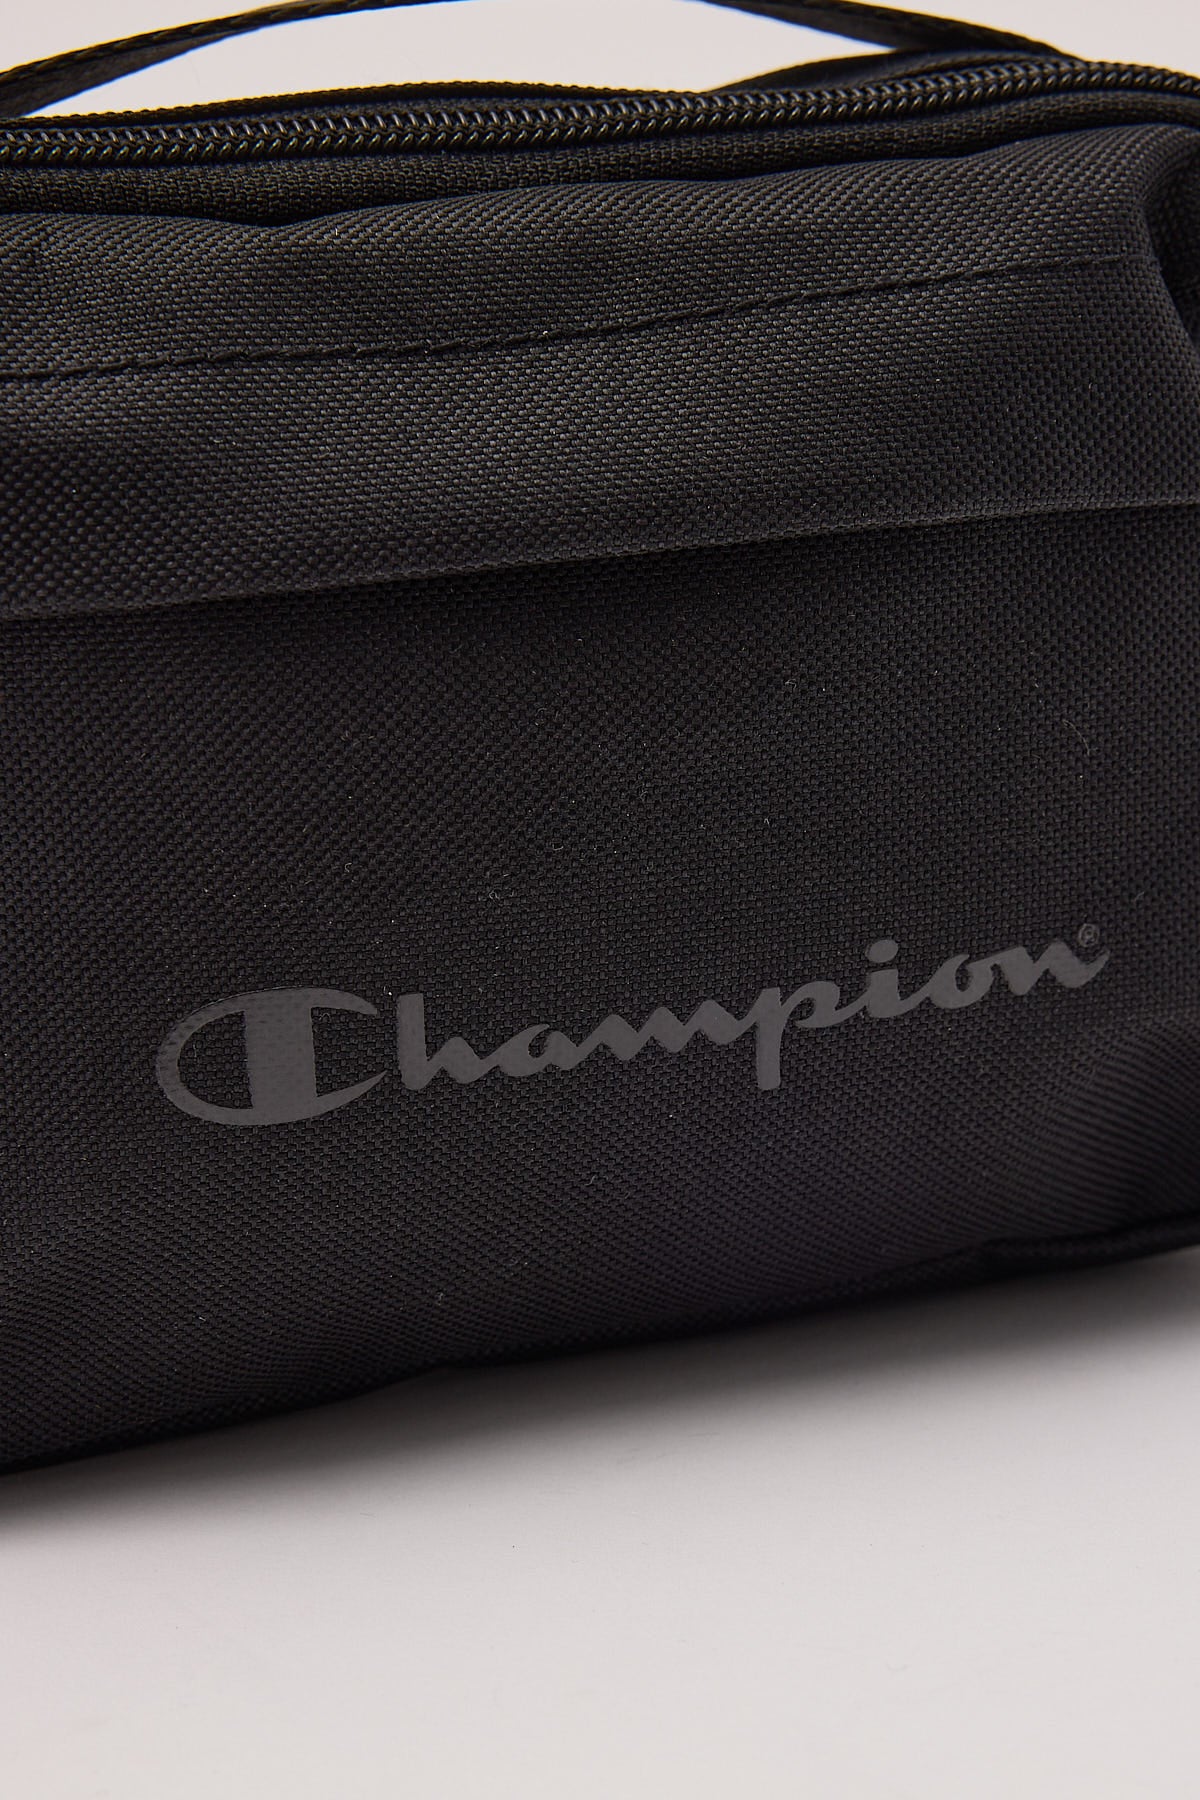 Champion Waist Bag Black